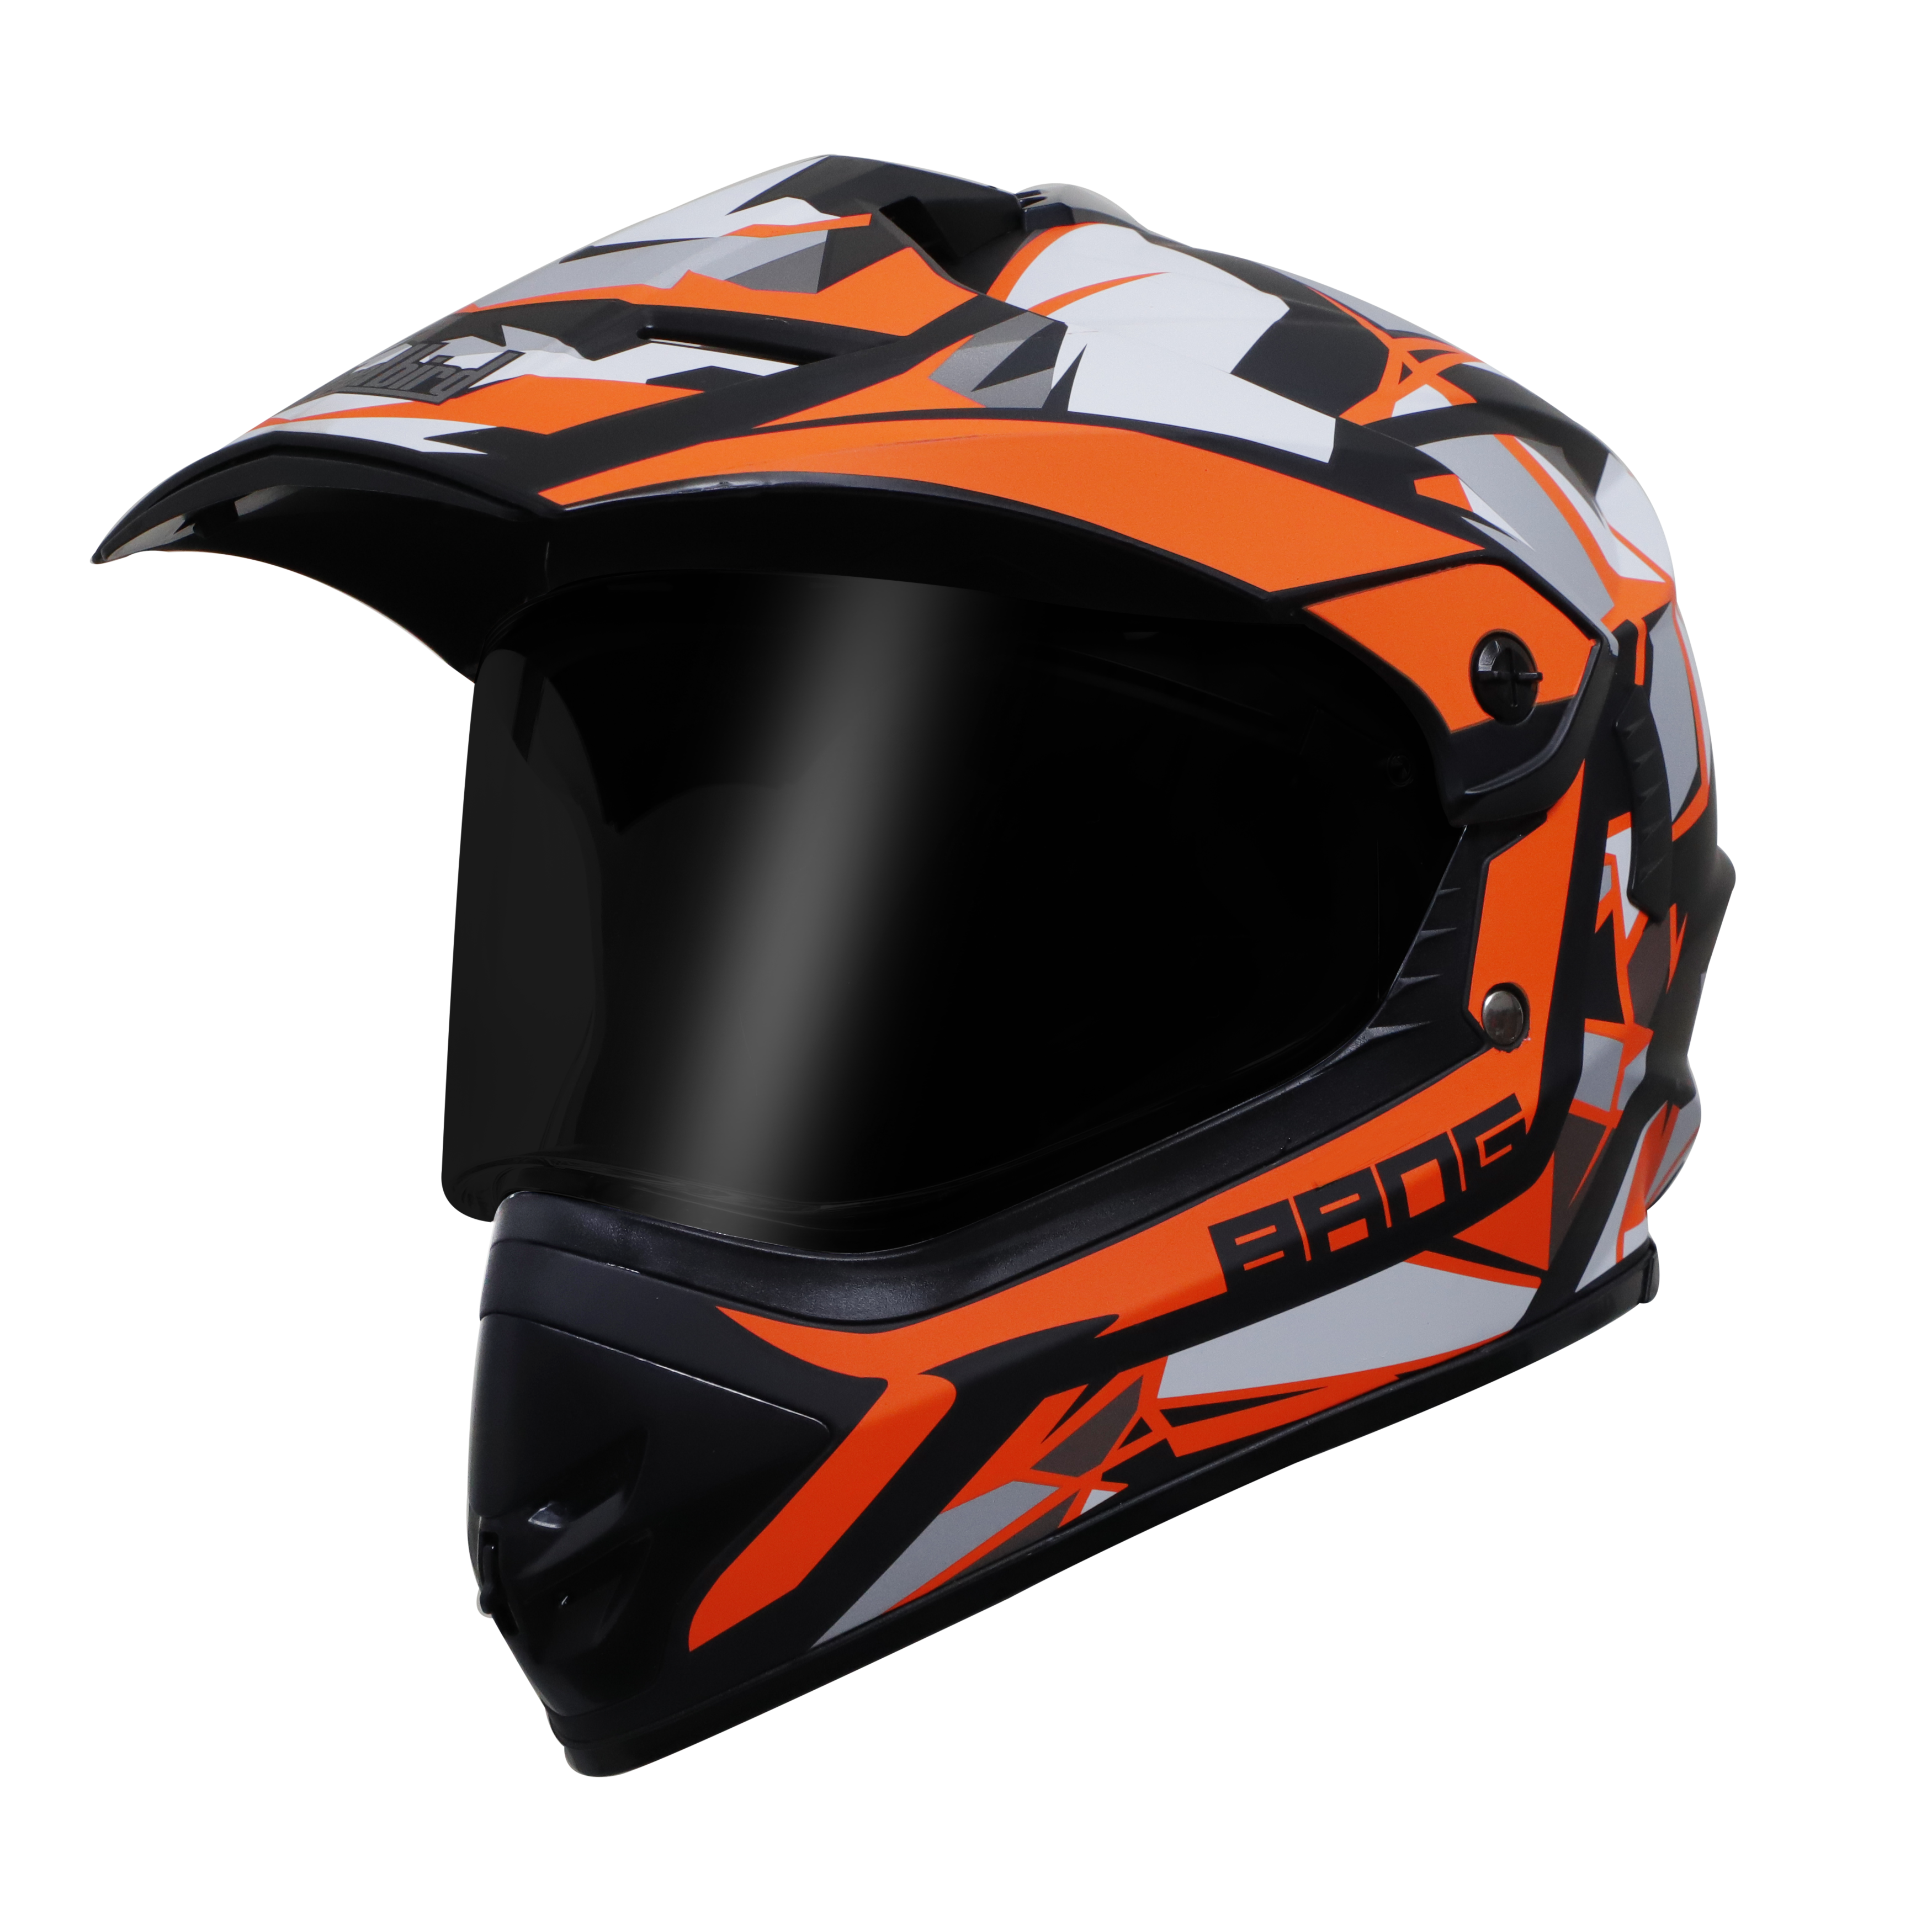 Steelbird Off Road Bang KTN ISI Certified ABS Material Shell Motocross Helmet (Matt Black Orange With Smoke Visor)